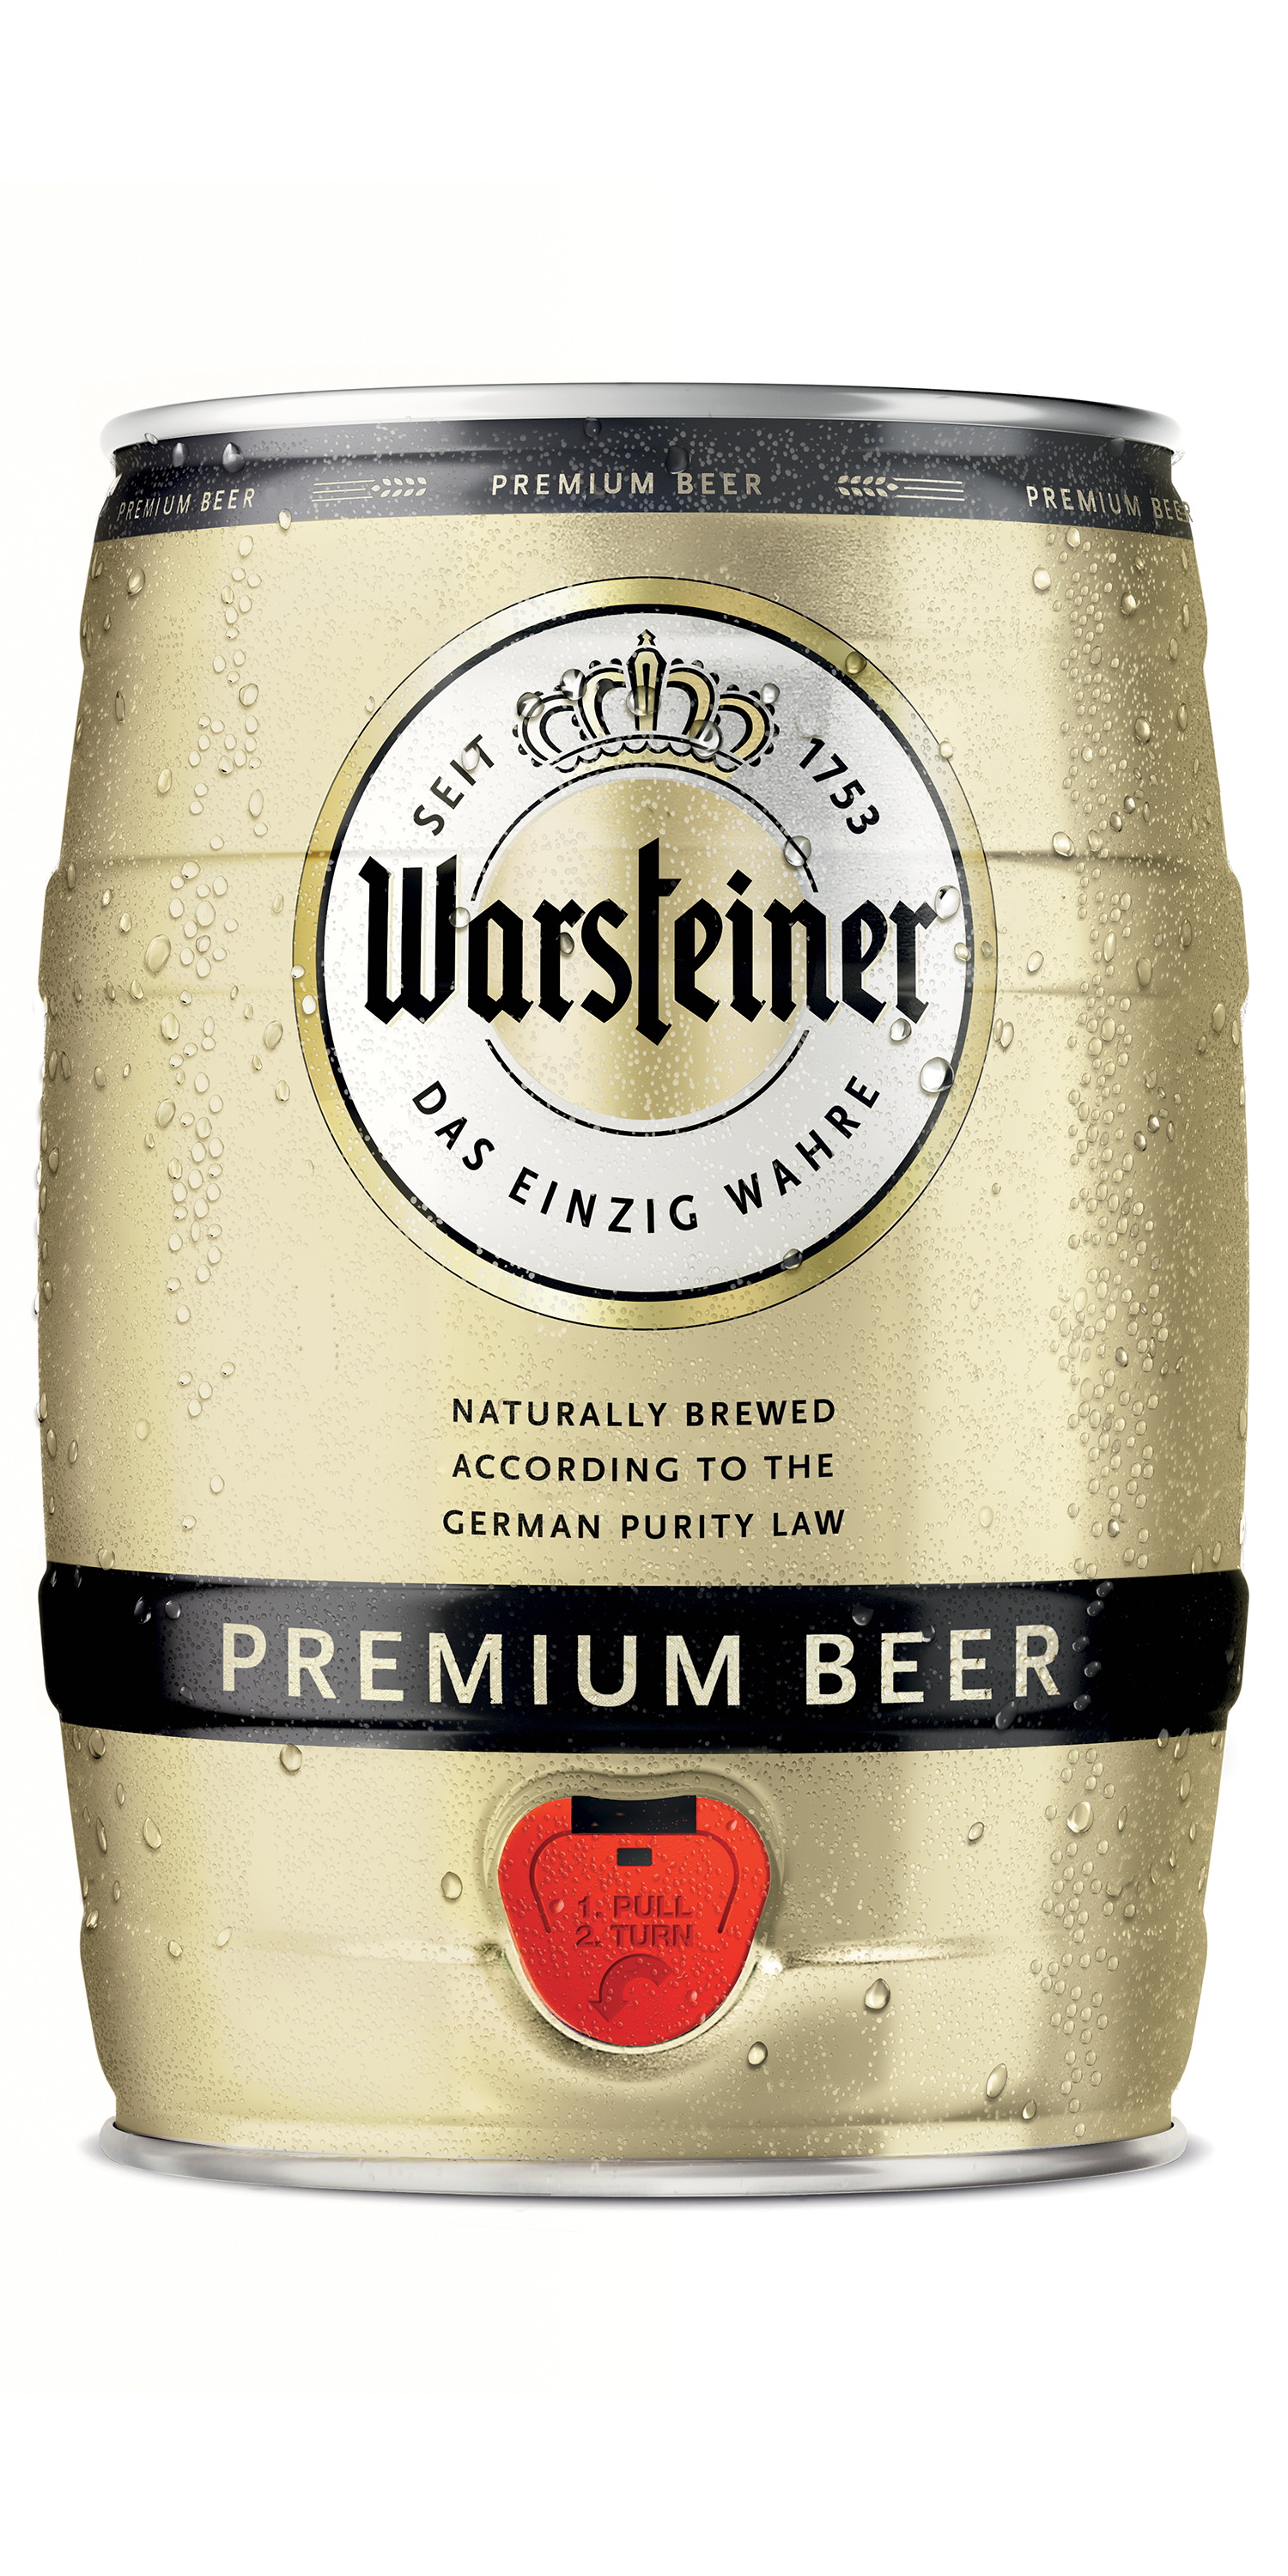 Пиво 5 литров купить спб. Пиво Варштайнер премиум бир. Warsteiner Premium Beer 5 л. Пиво Варштайнер 0.33. Пиво Warsteiner Premium 0.5 л.